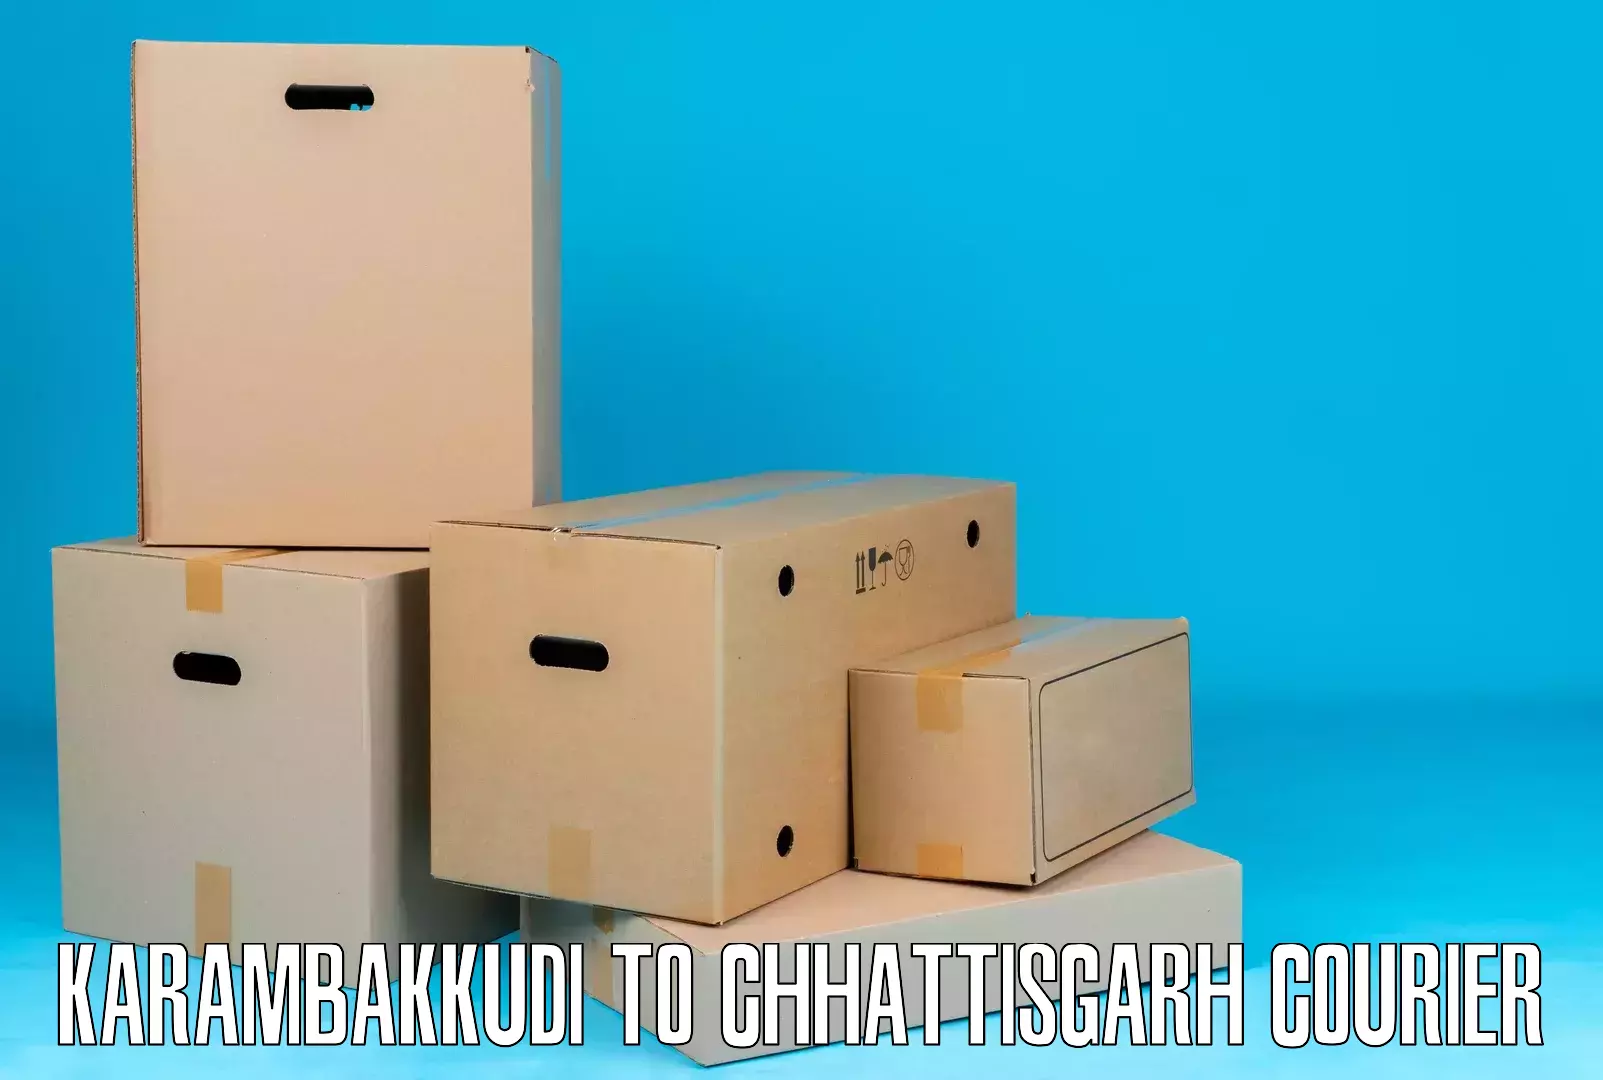 Package consolidation Karambakkudi to Korea Chhattisgarh